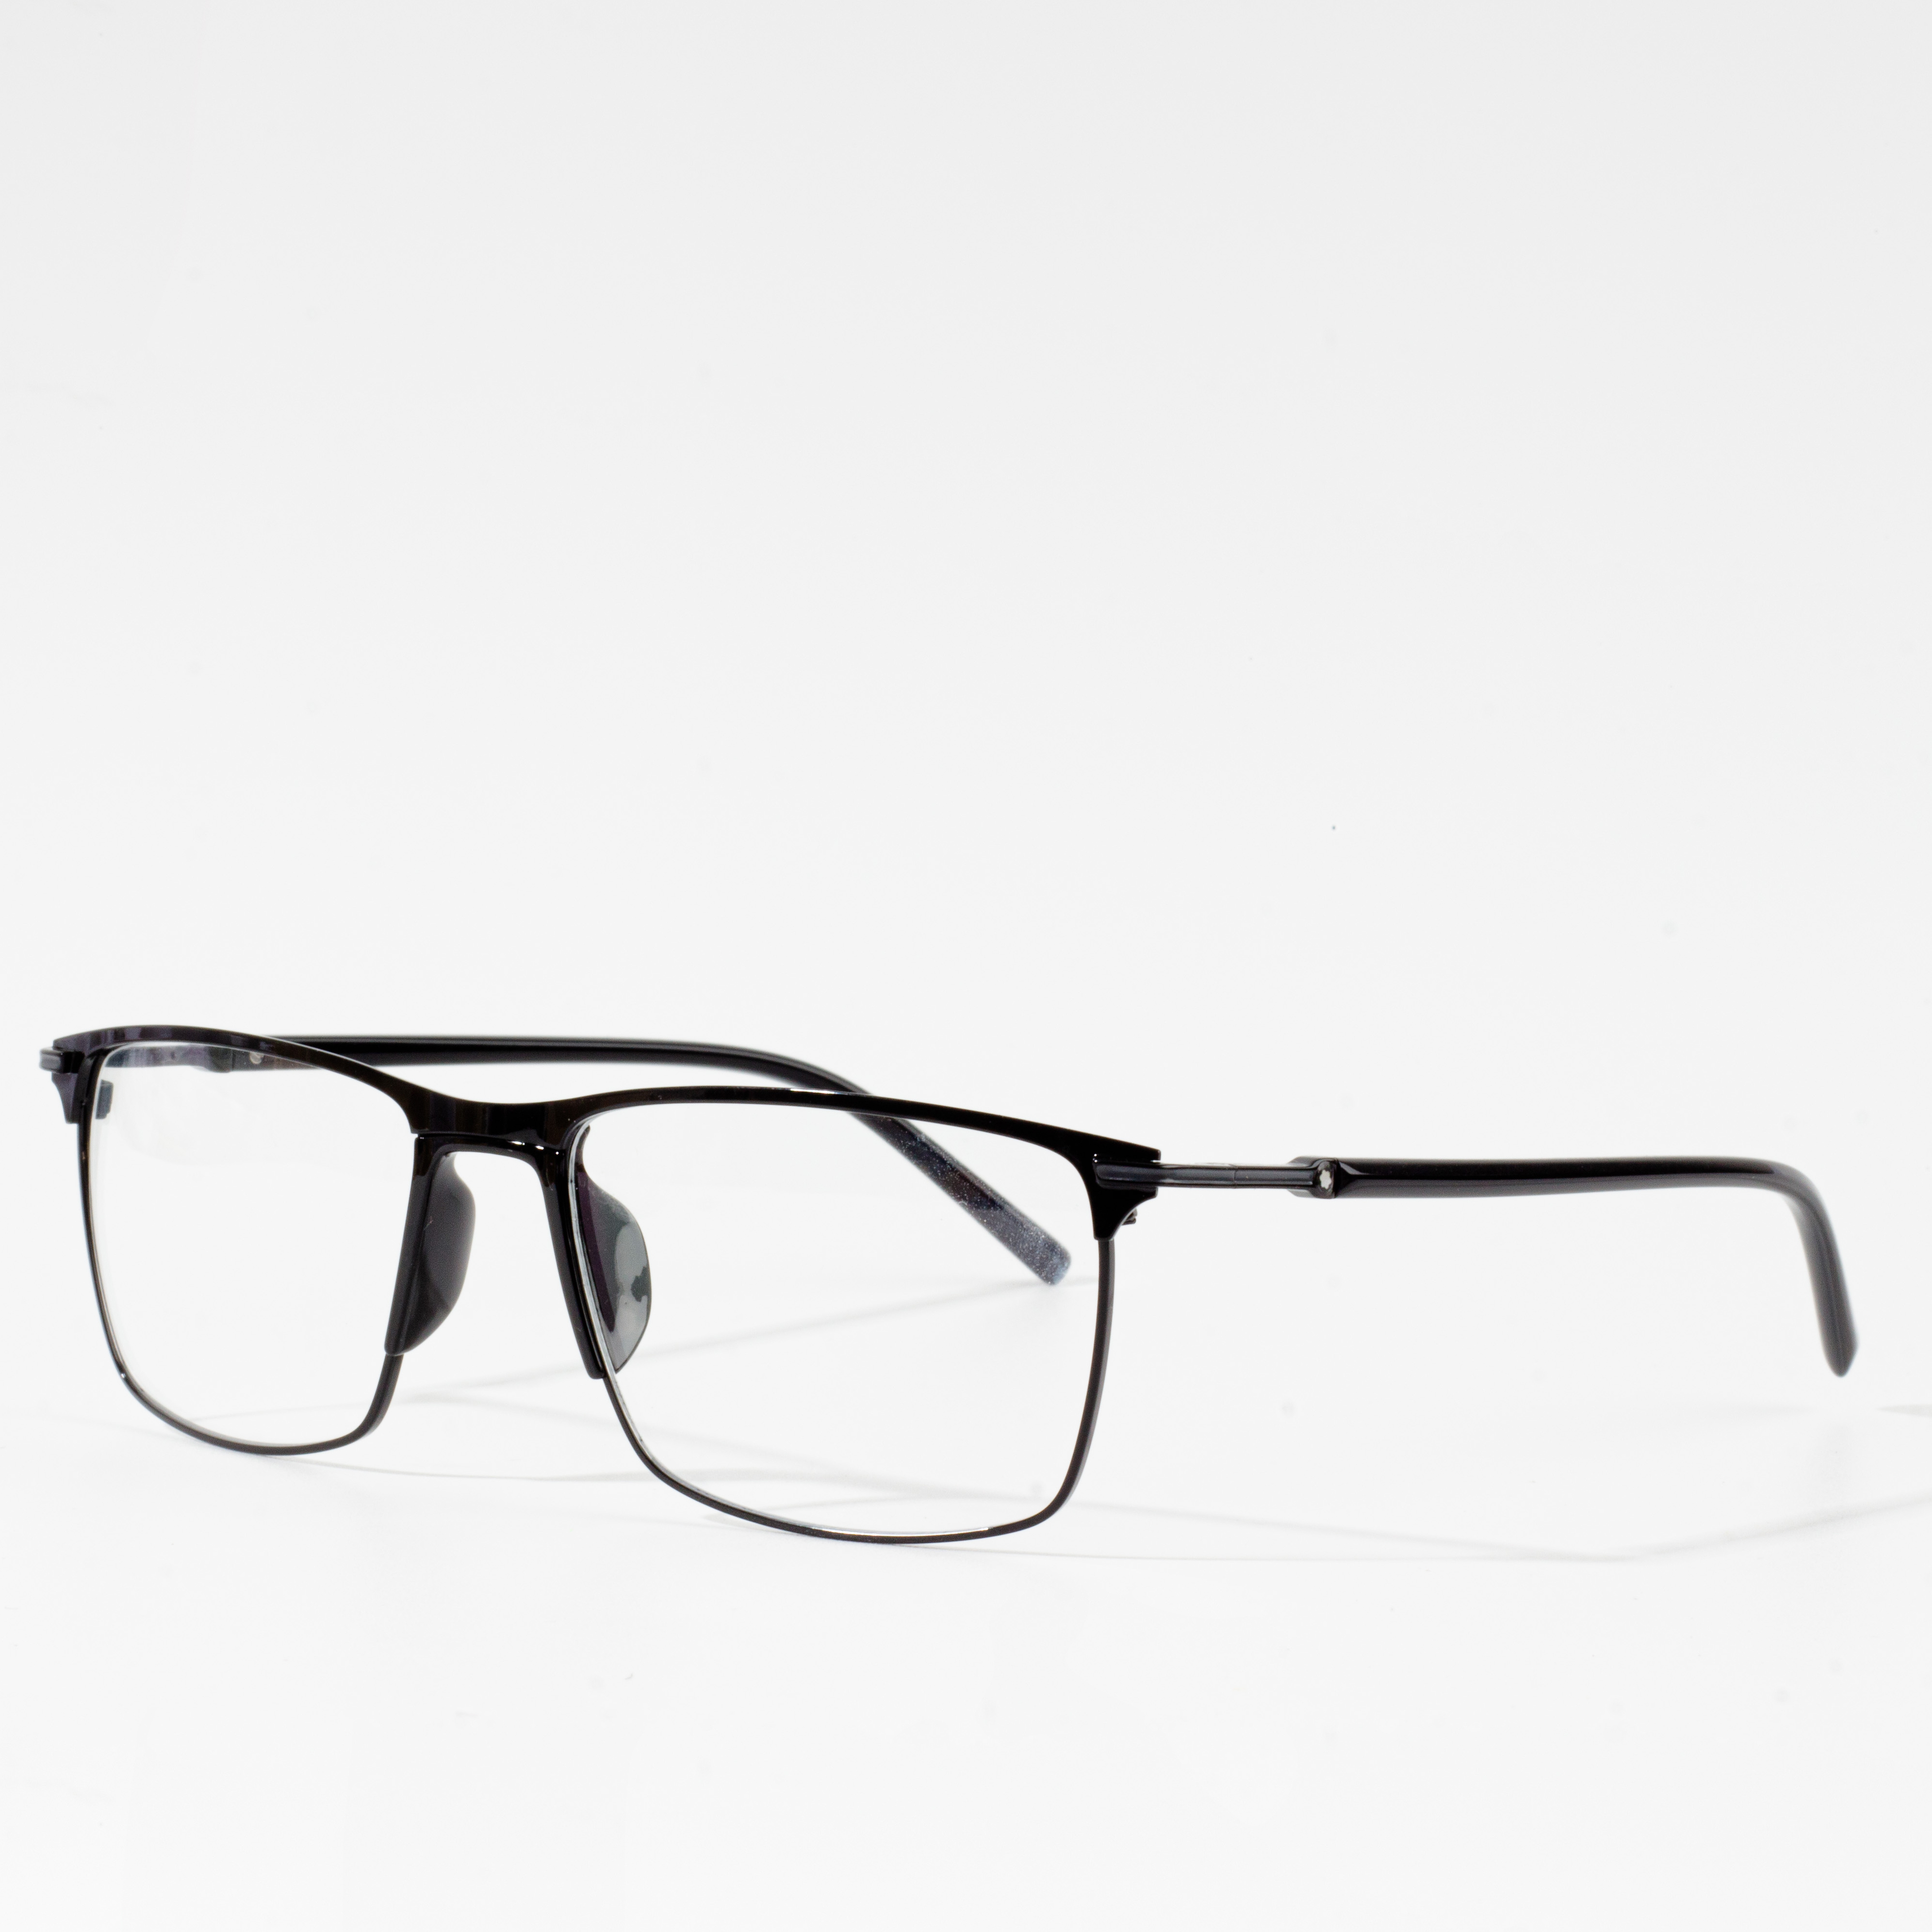 montature per occhiali ottici maschili